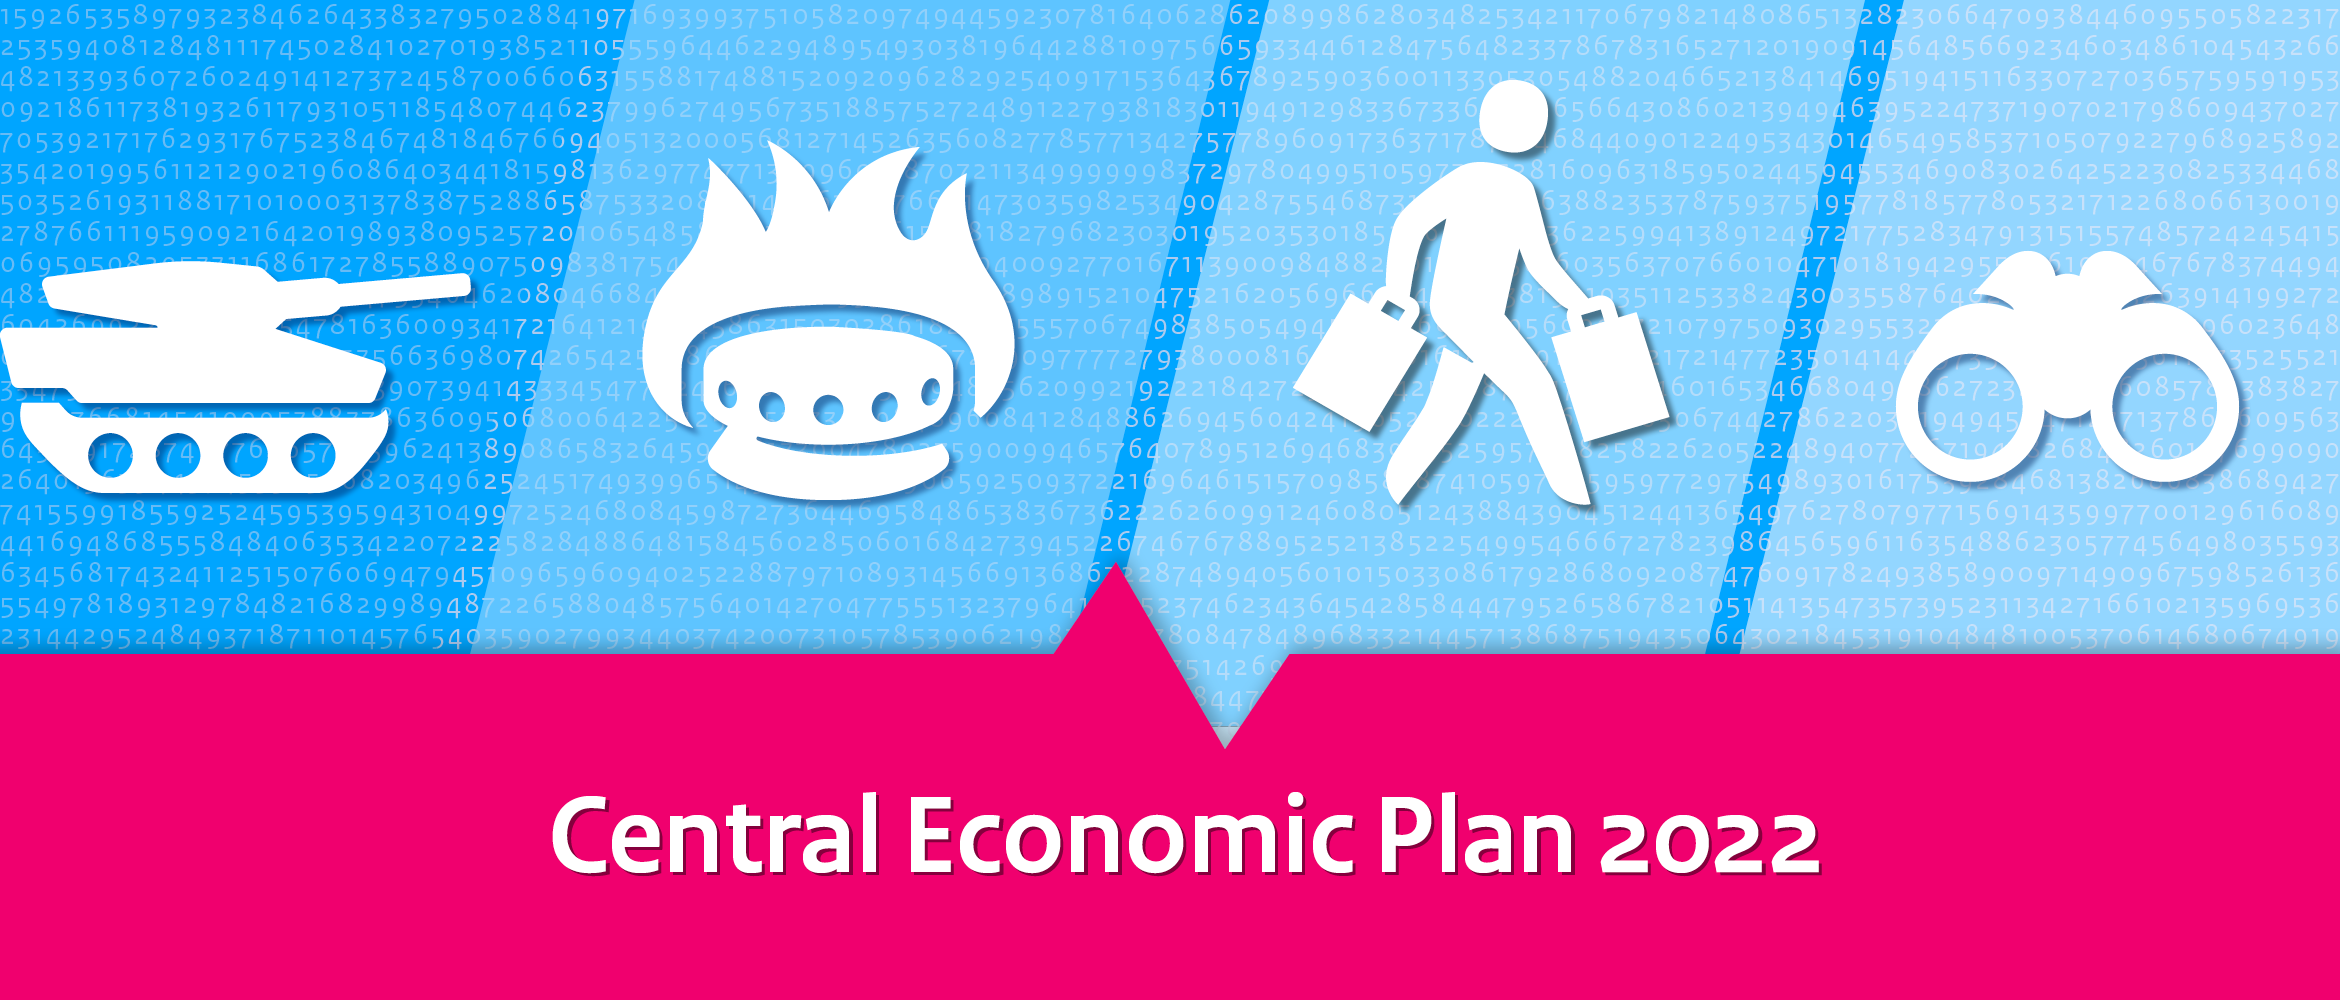 Central Economic Plan 2022